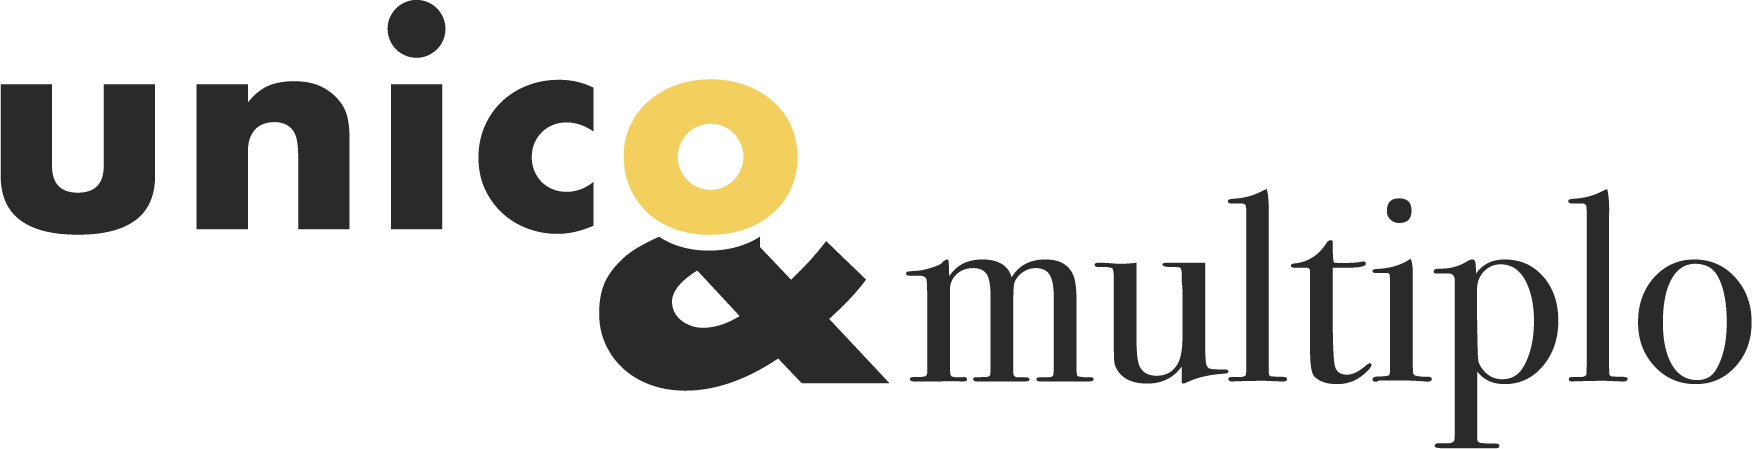 Unico&Multiplo - logo